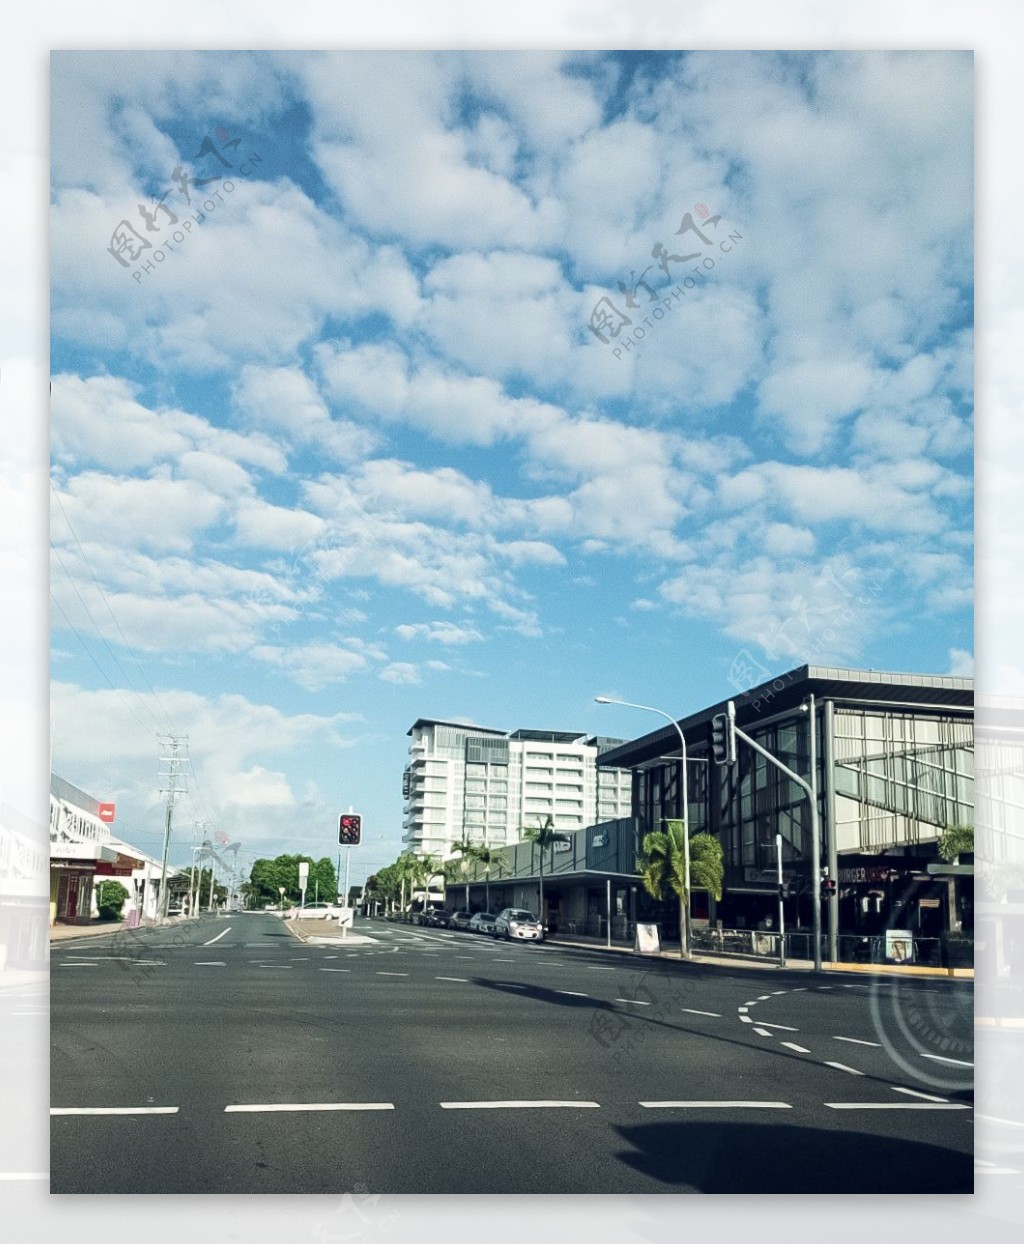 蓝天白云下的澳洲街道